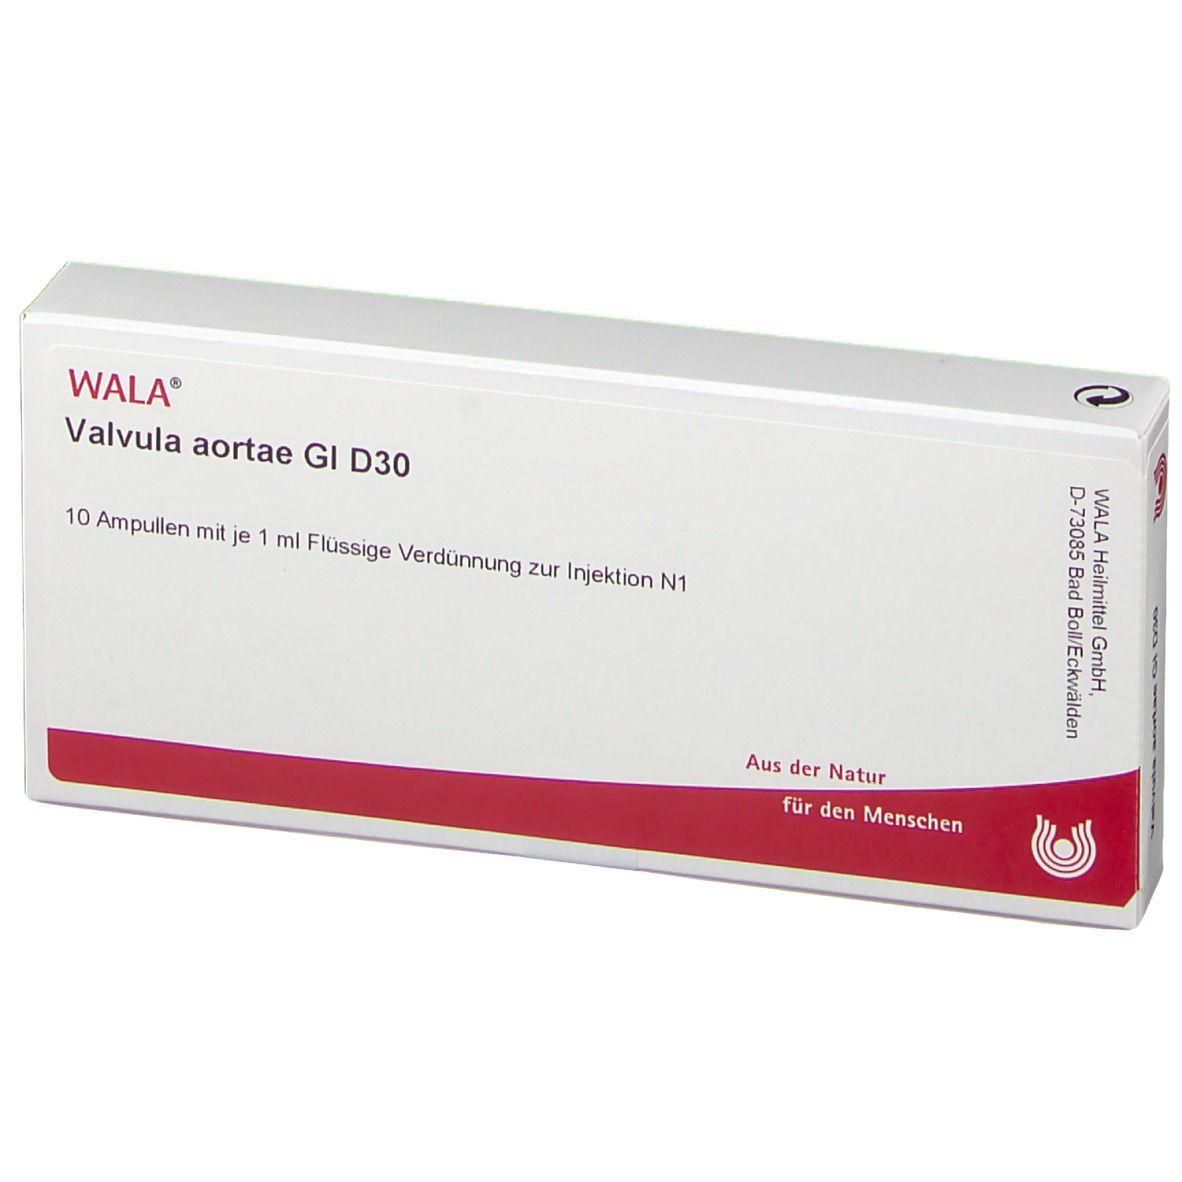 WALA® Valvula aortae Gl D 30